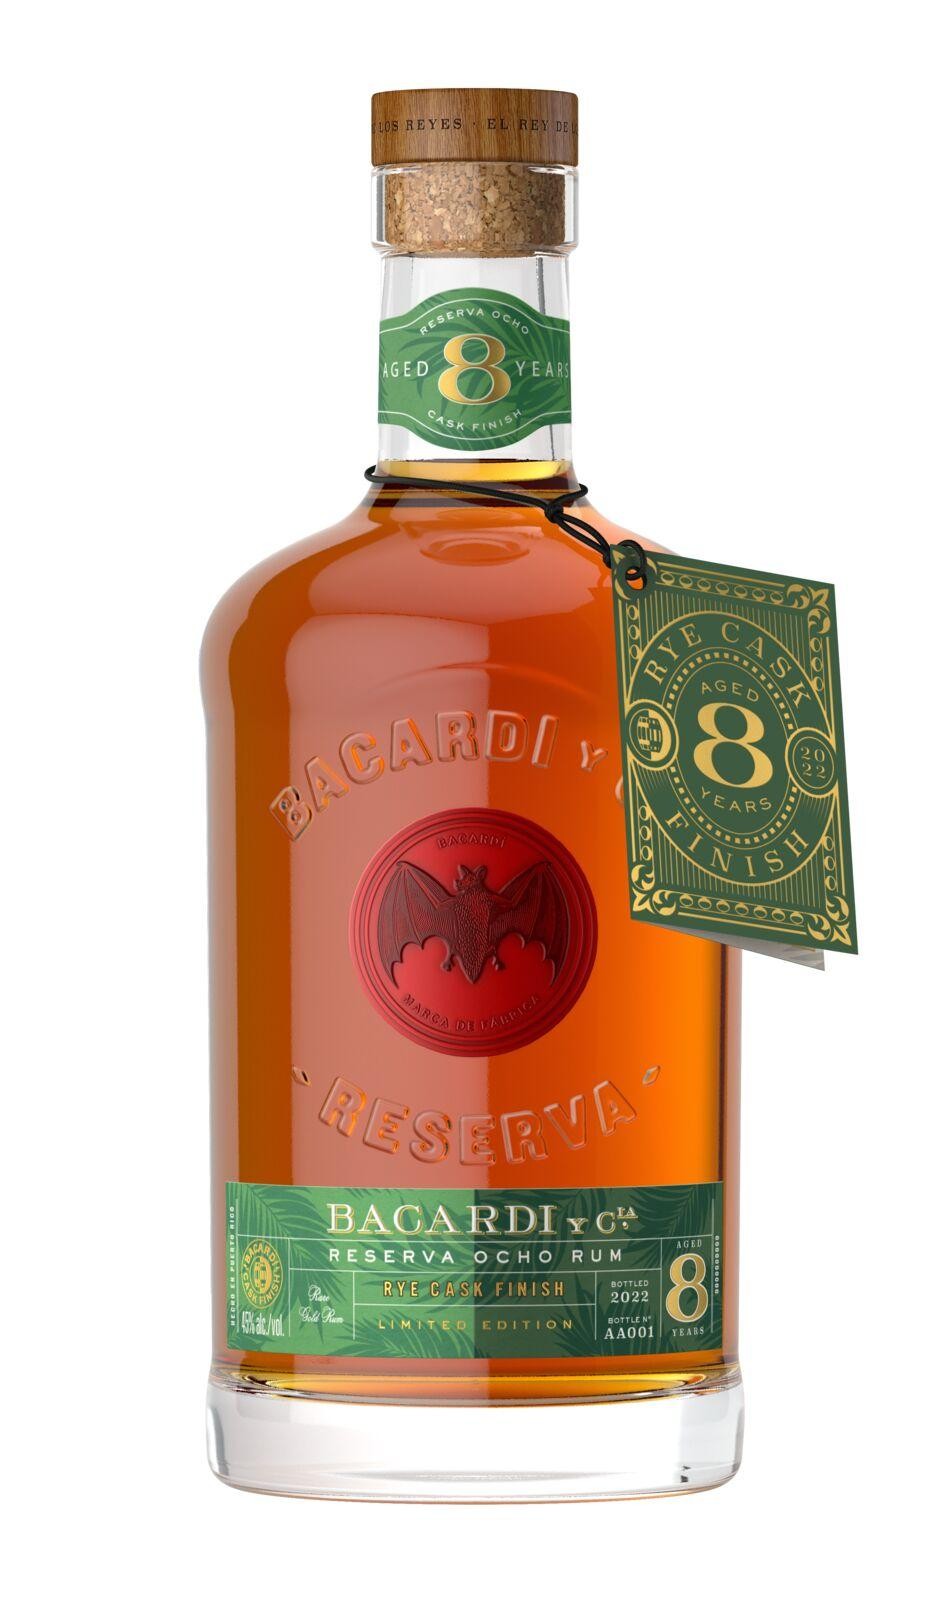 Bacardi Reserva Ocho Rye Cask Finish Aged Rum - 750ml Bottle